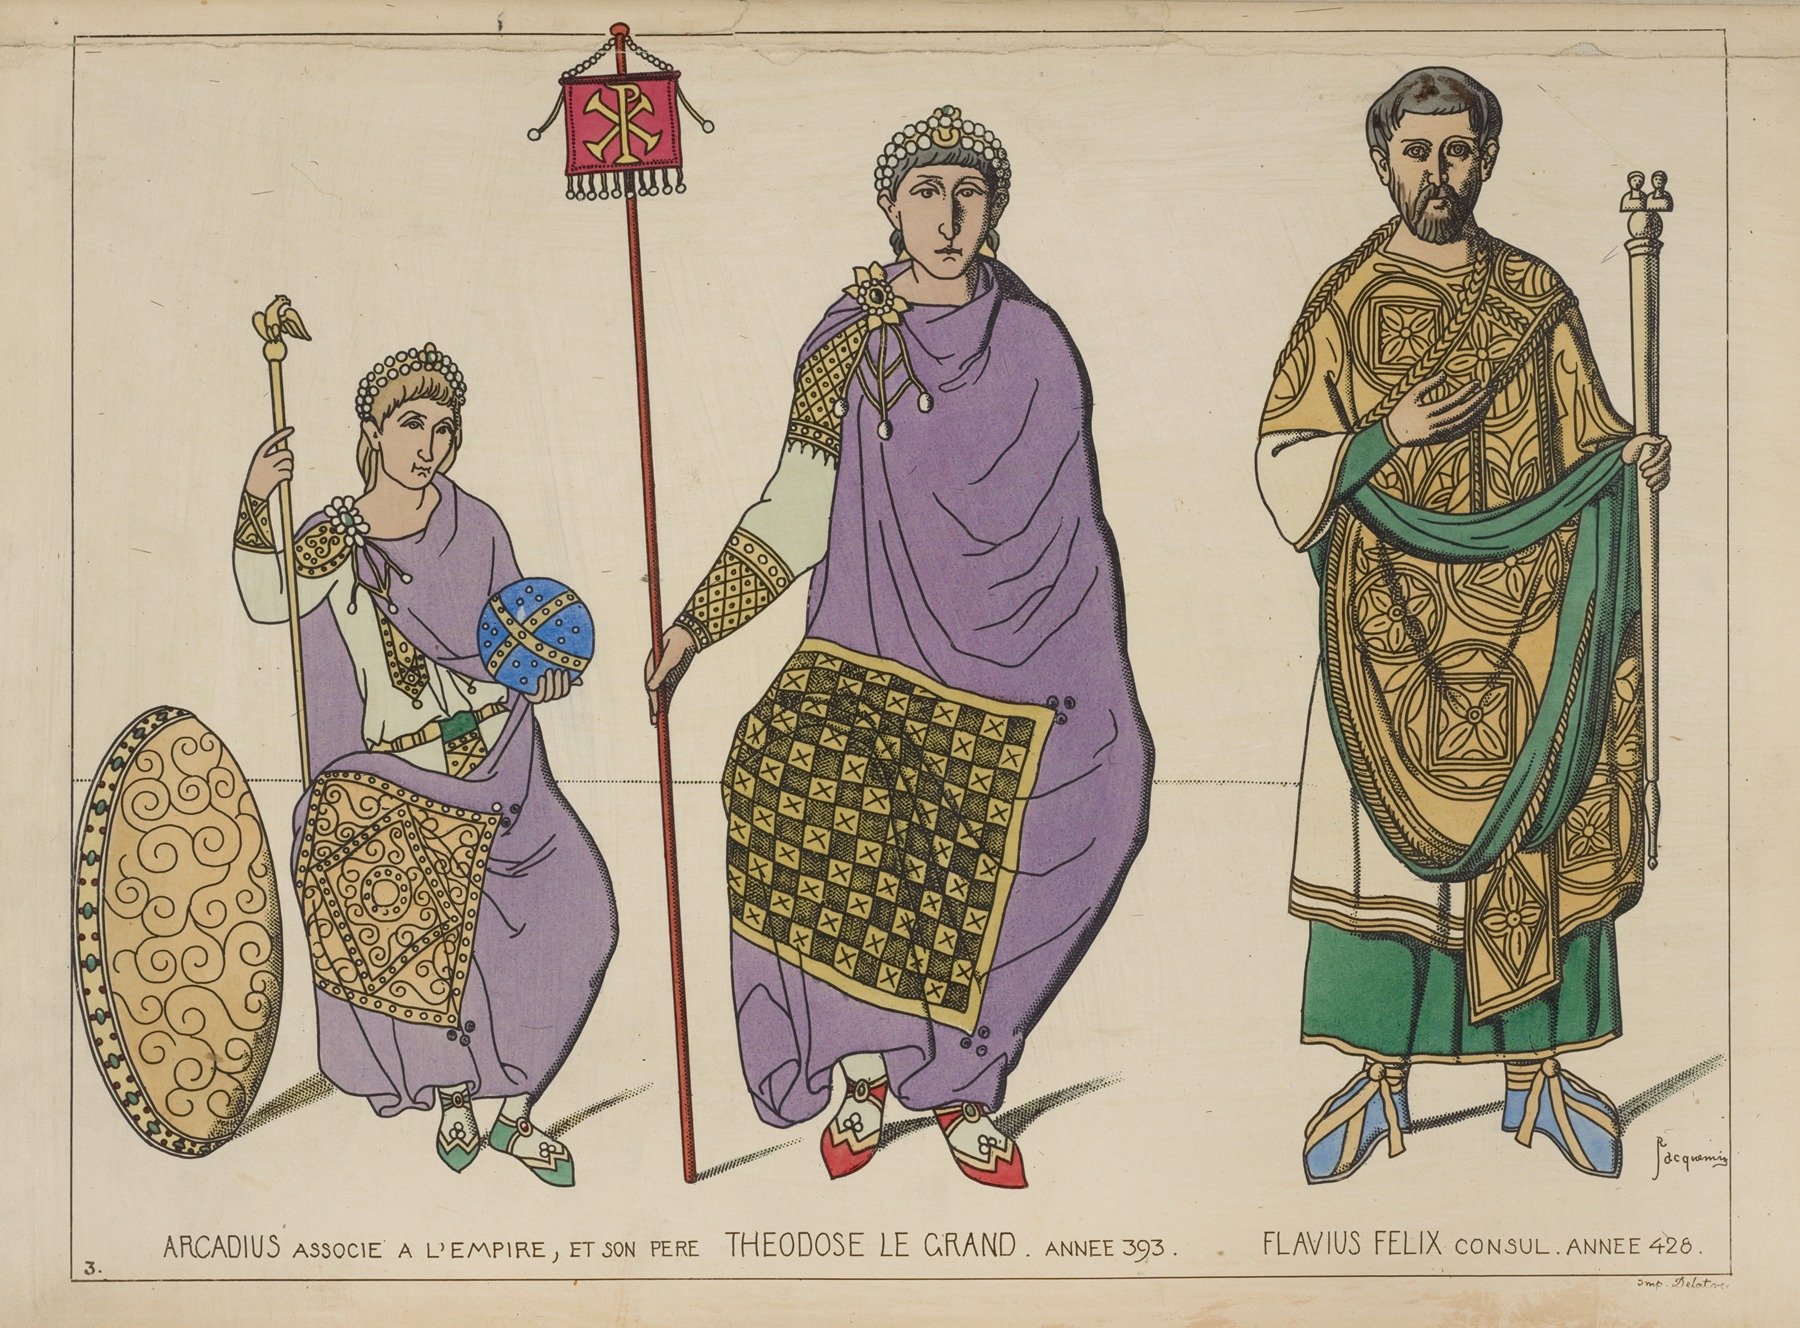 Raphaël Jacquemin - Arcadius associe a l’empire, et son pere Theodose Le Grand, annee 393. Flavius Felix consul, annee 428.